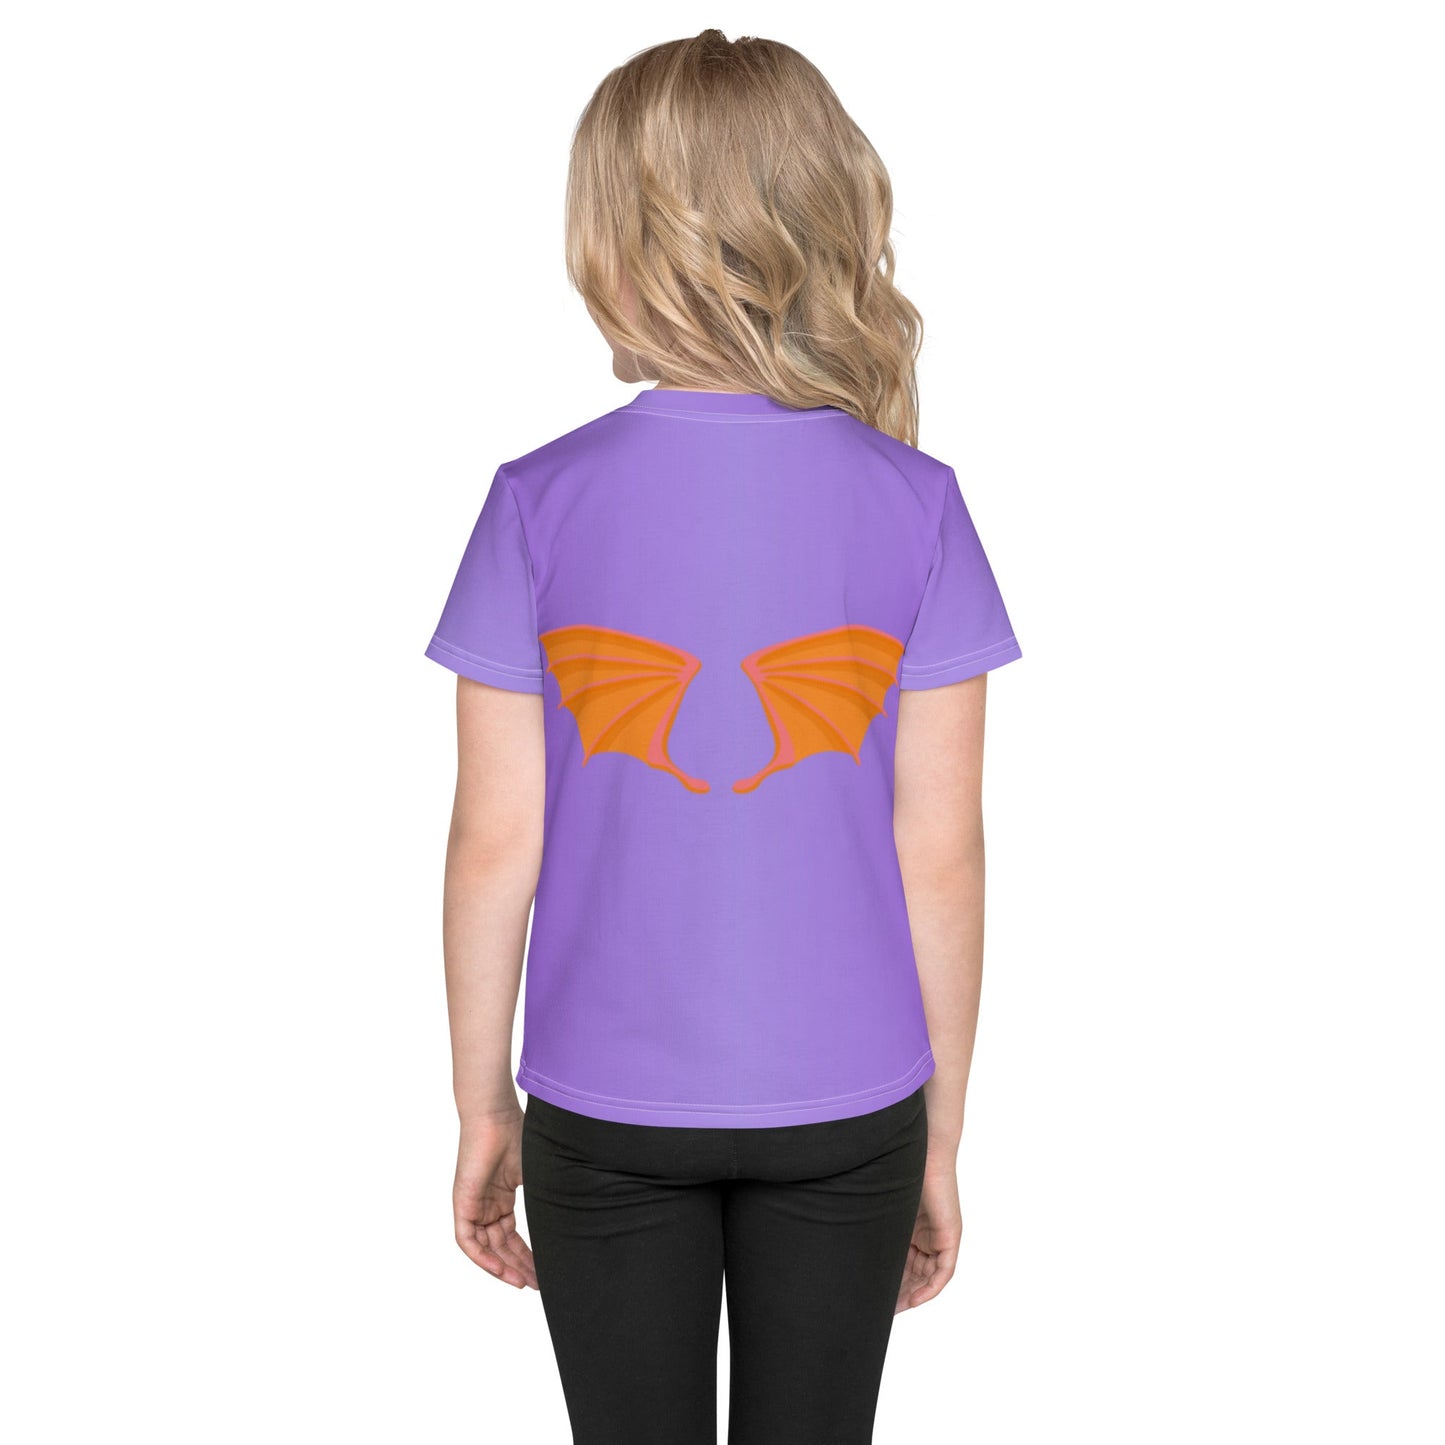 The Friendly Dragon Kids crew neck t-shirt coordinating disney stylecosplay styledisney kid clothing#tag4##tag5##tag6#